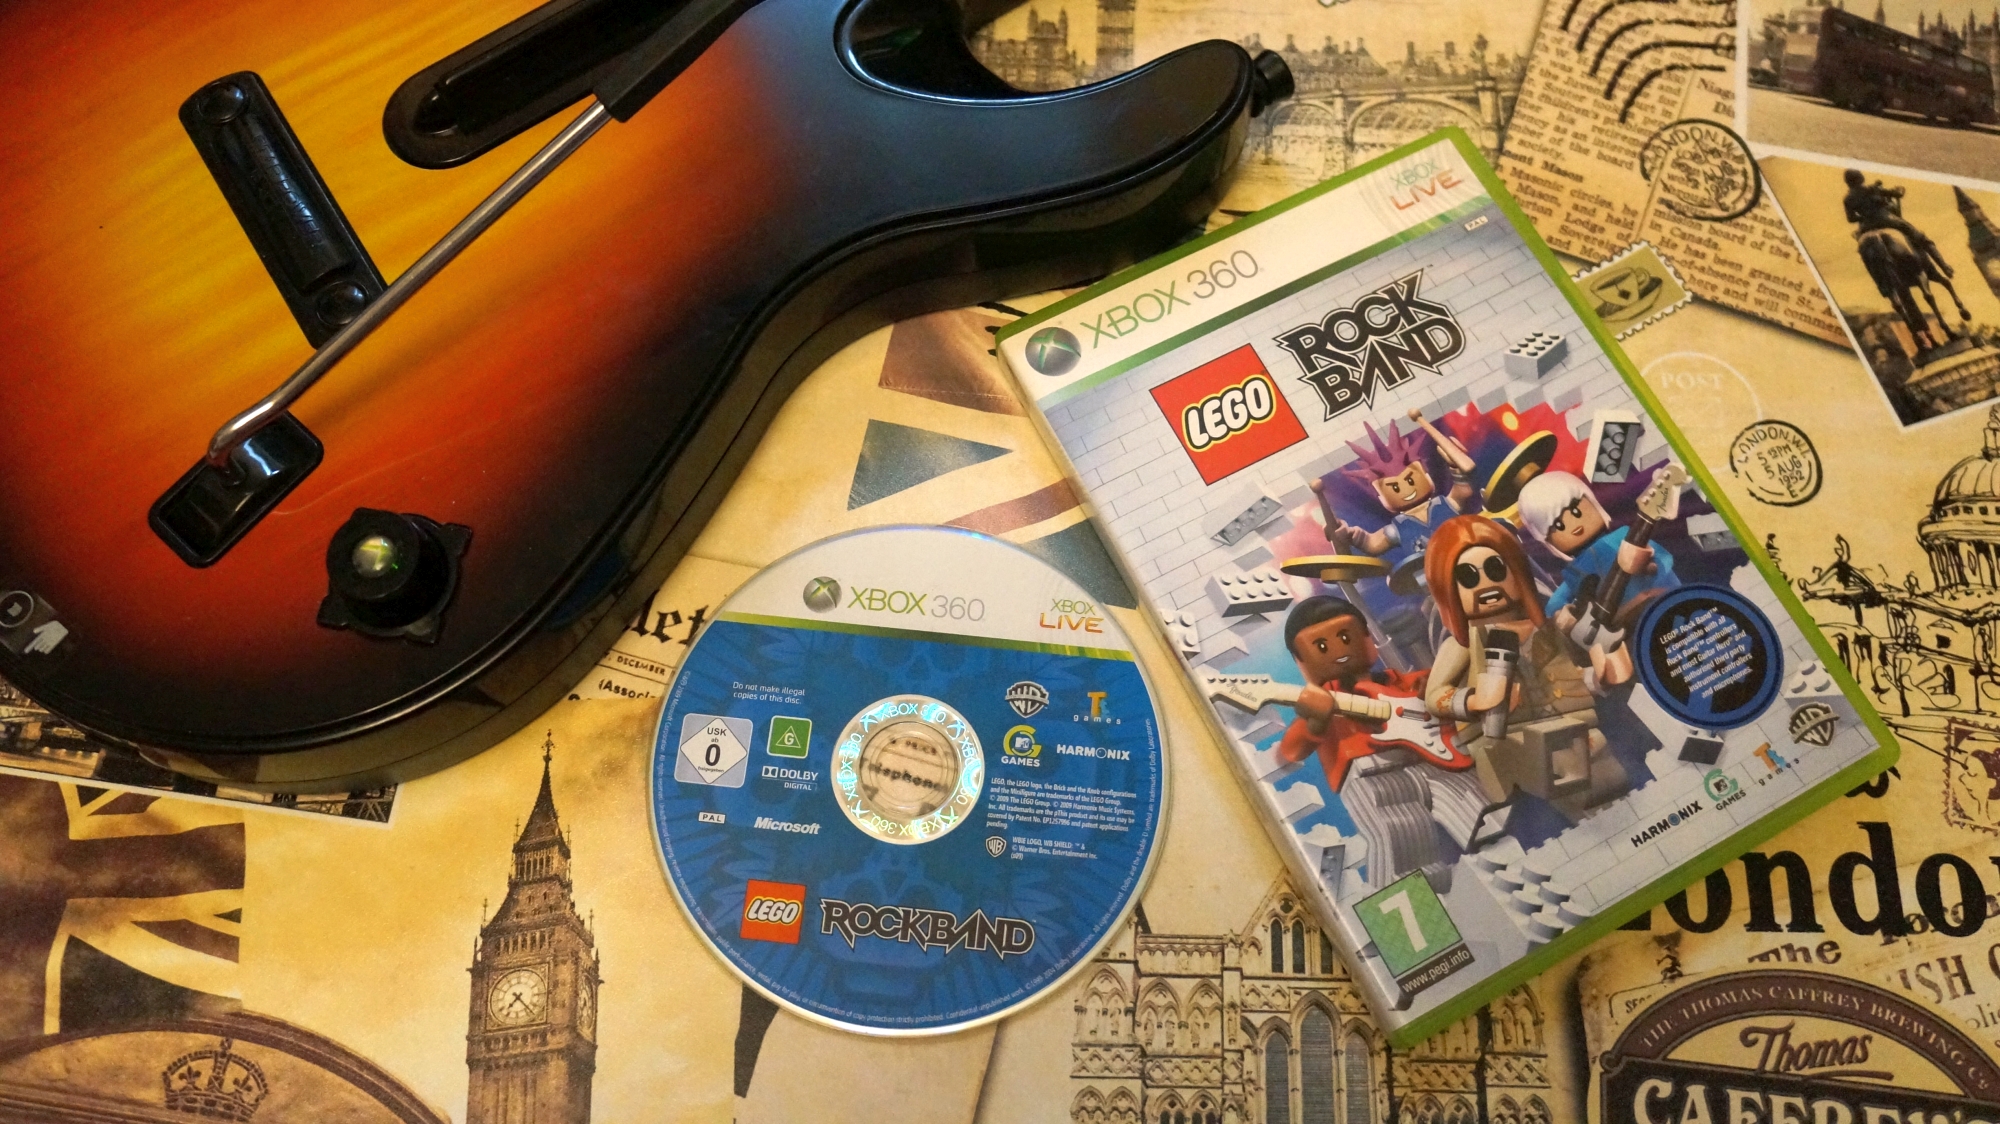 Игра LEGO Rock Band для Xbox 360 фото коробки, диска и гитары